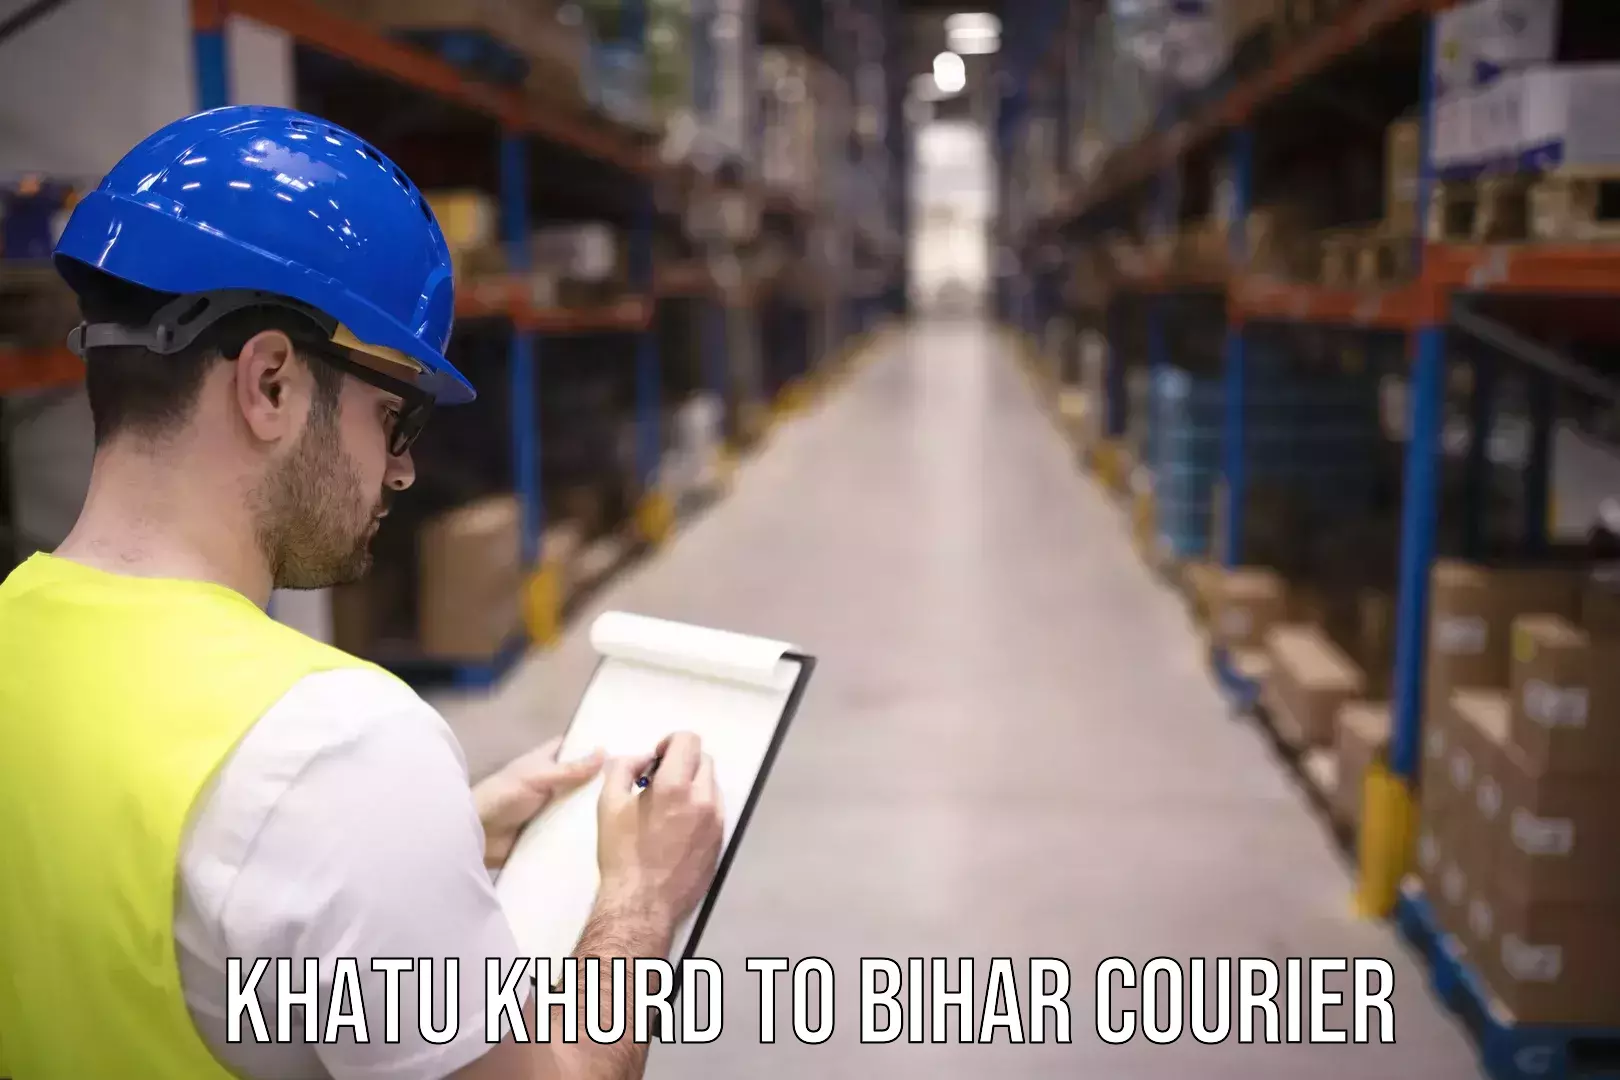 User-friendly courier app Khatu Khurd to Bihar